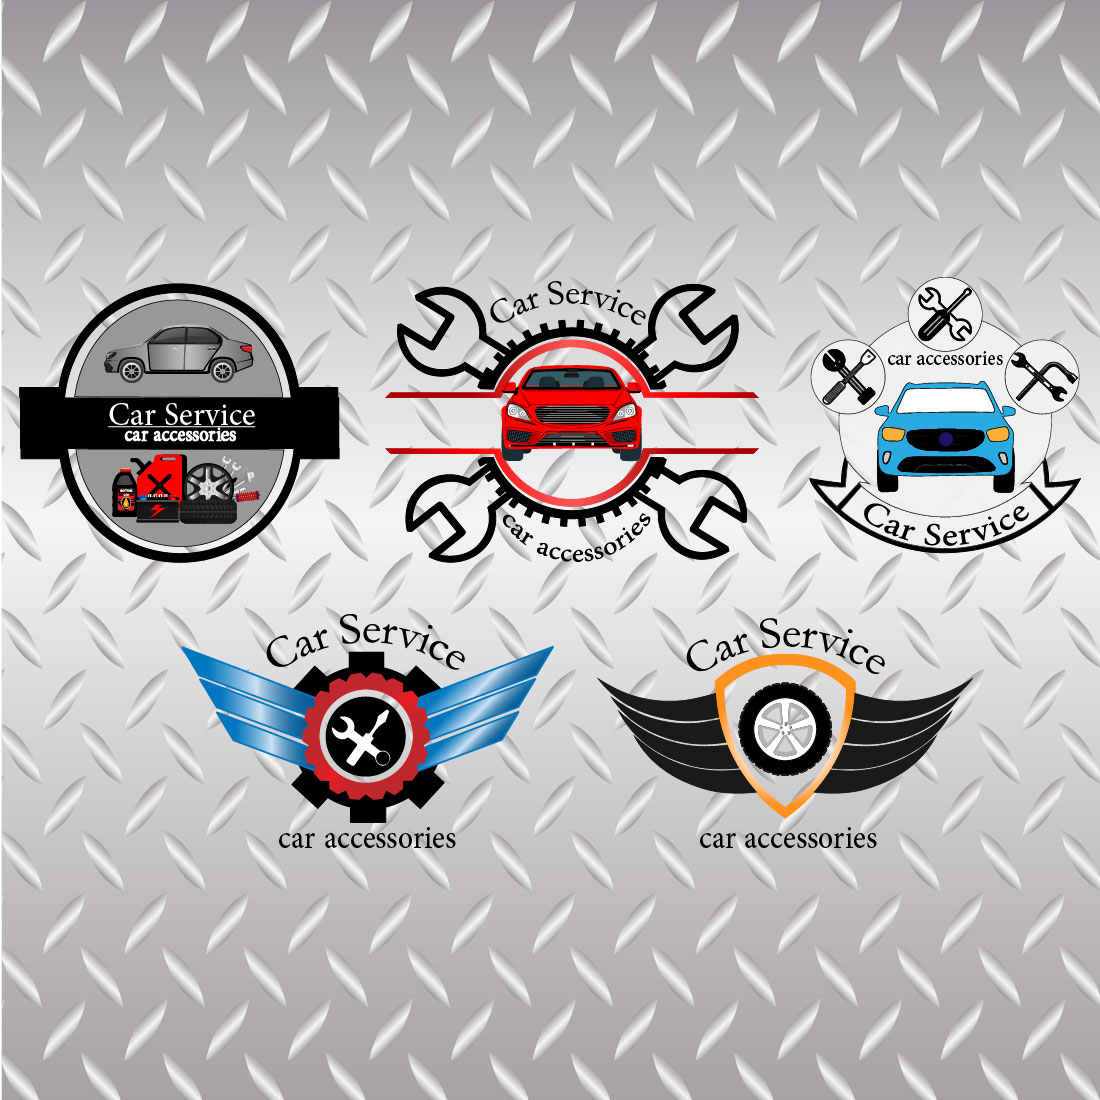 Logo Car Service Templates cover image.